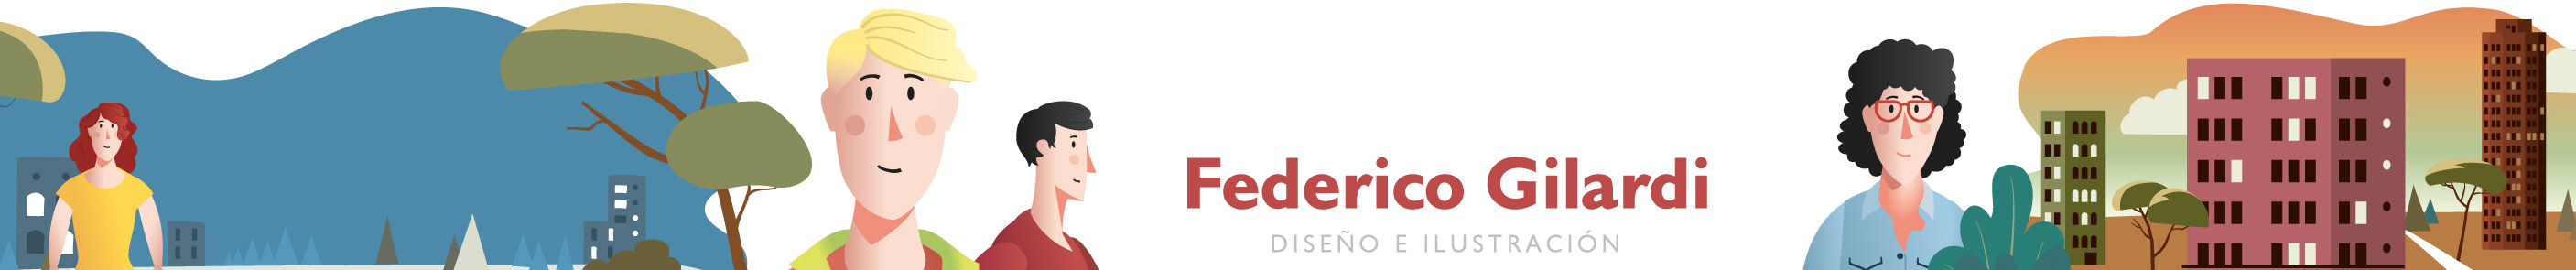 Banner profilu uživatele Federico Gilardi